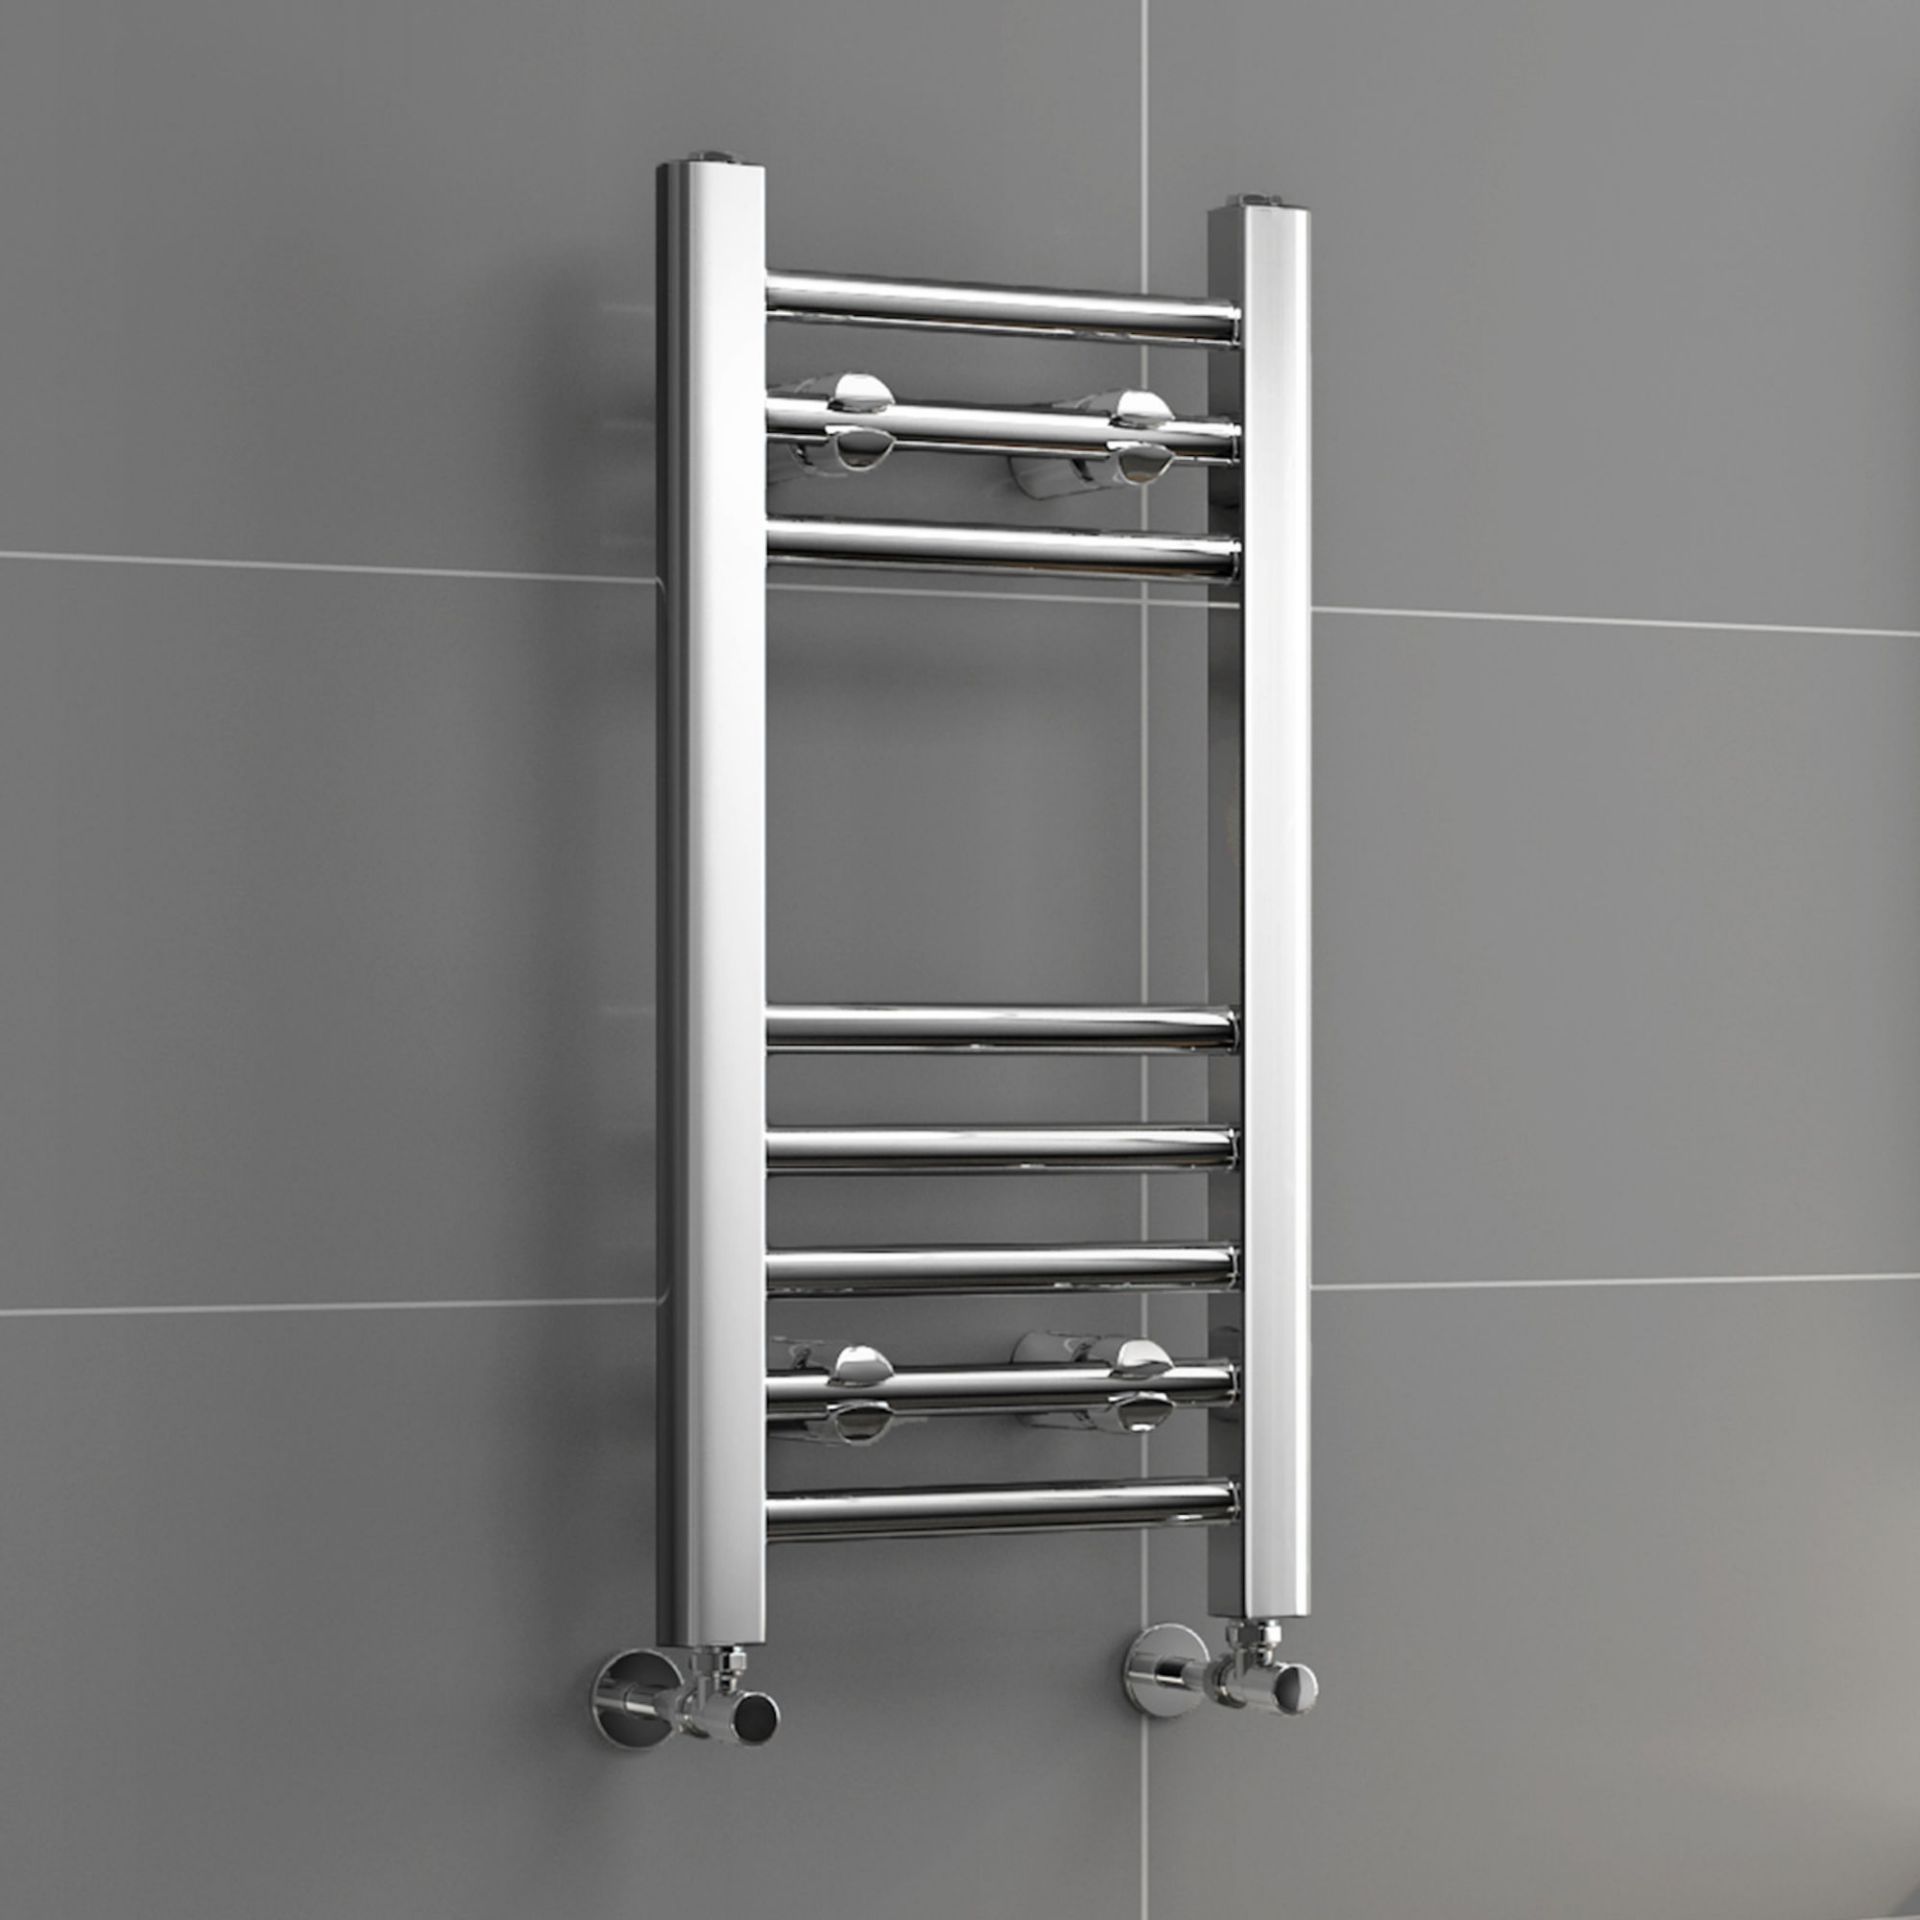 (ED160) 600x300mm - 20mm Tubes - Chrome Heated Straight Rail Ladder Towel Rail. Low carbon steel